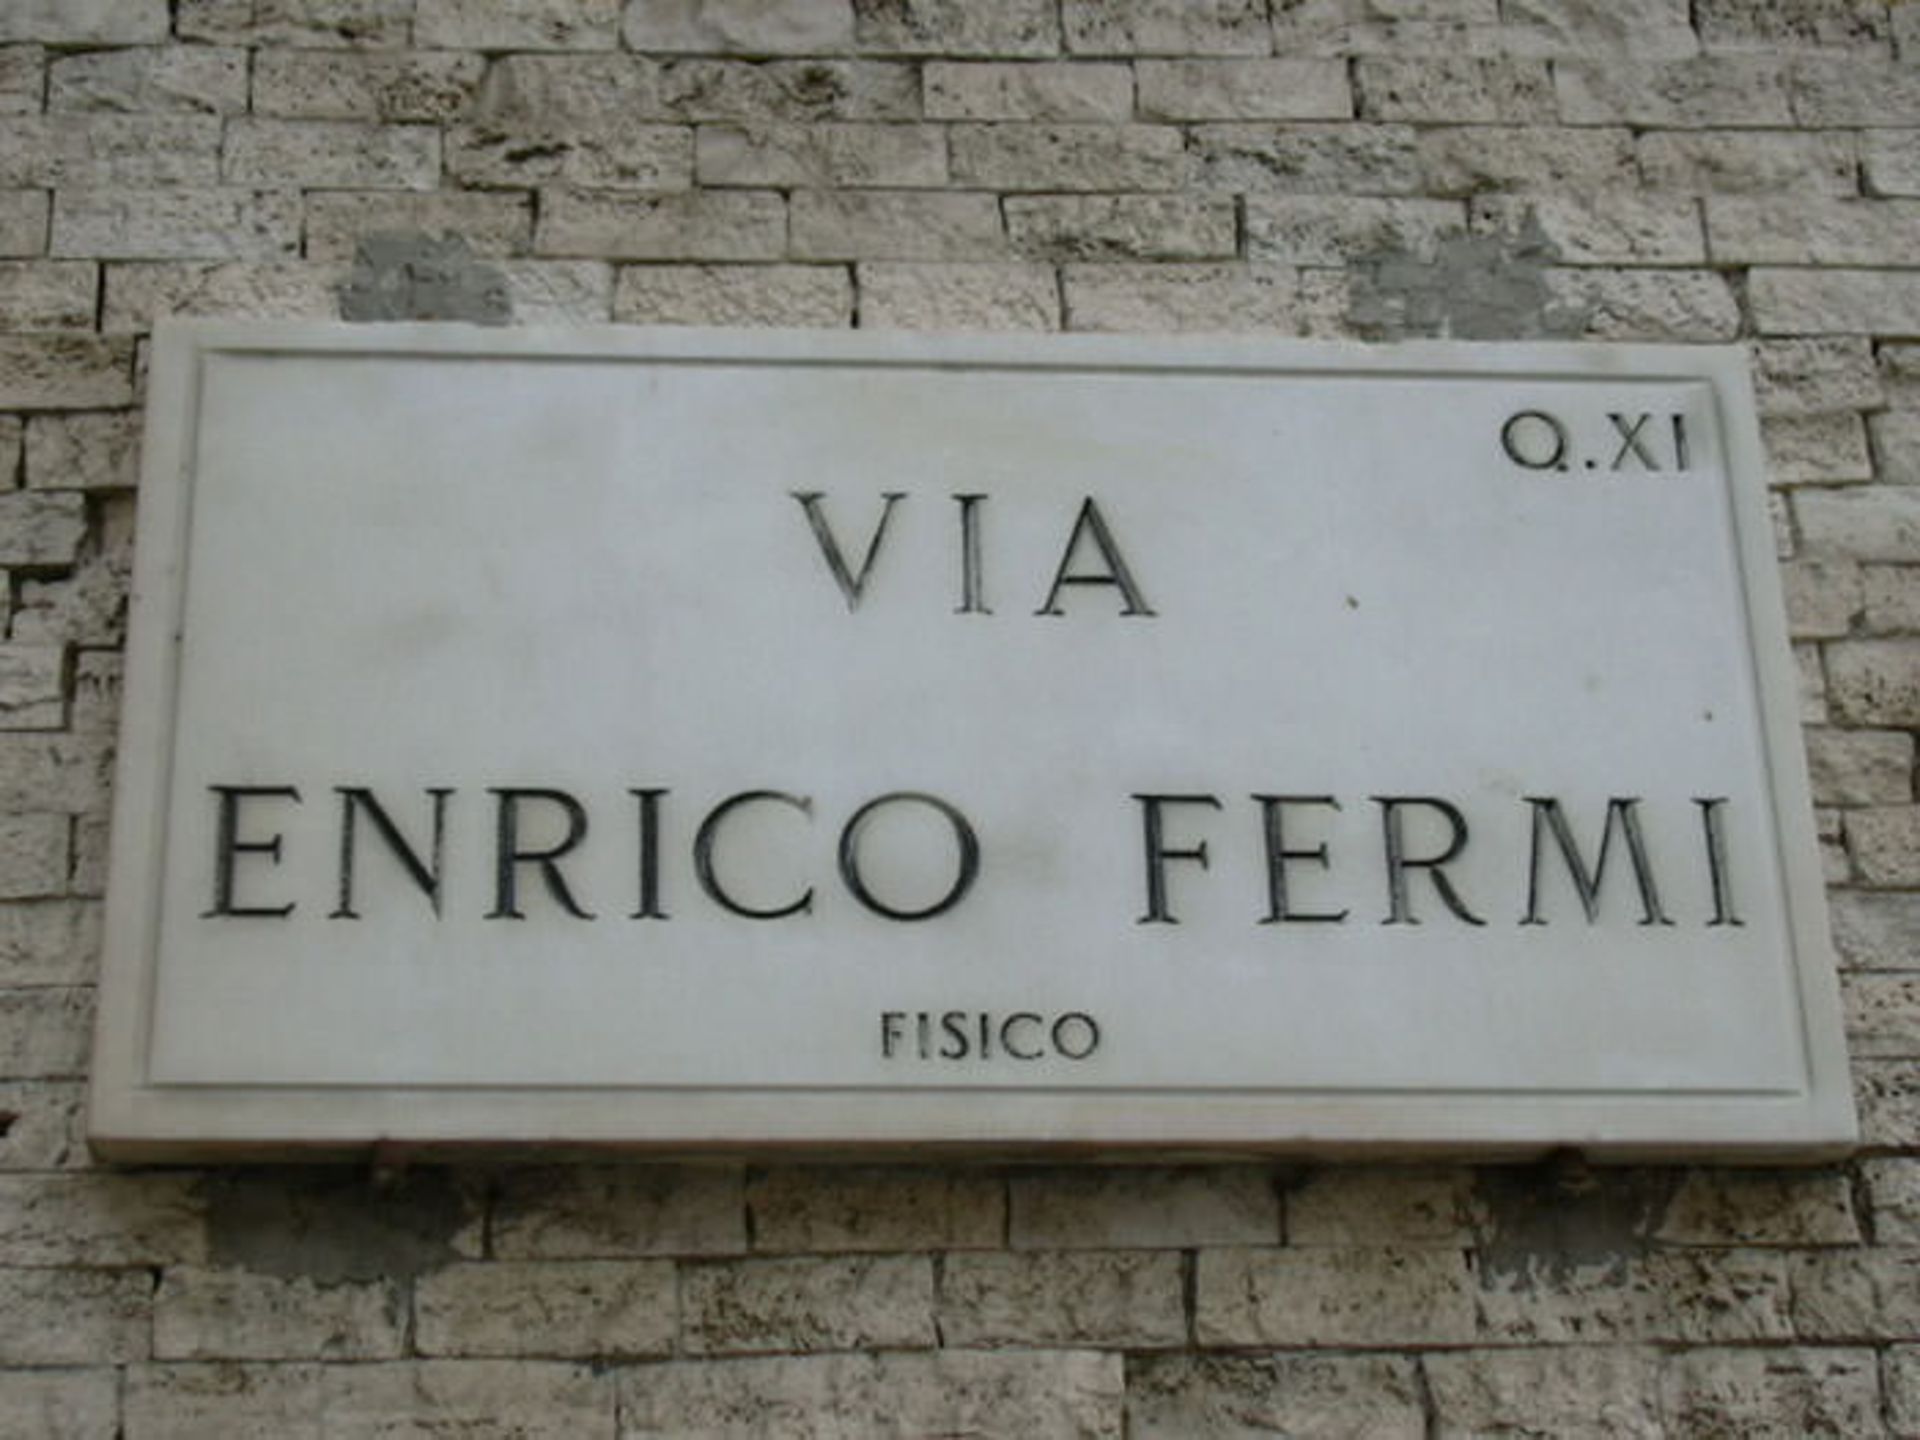 انریکو فرمی / Enrico Fermi